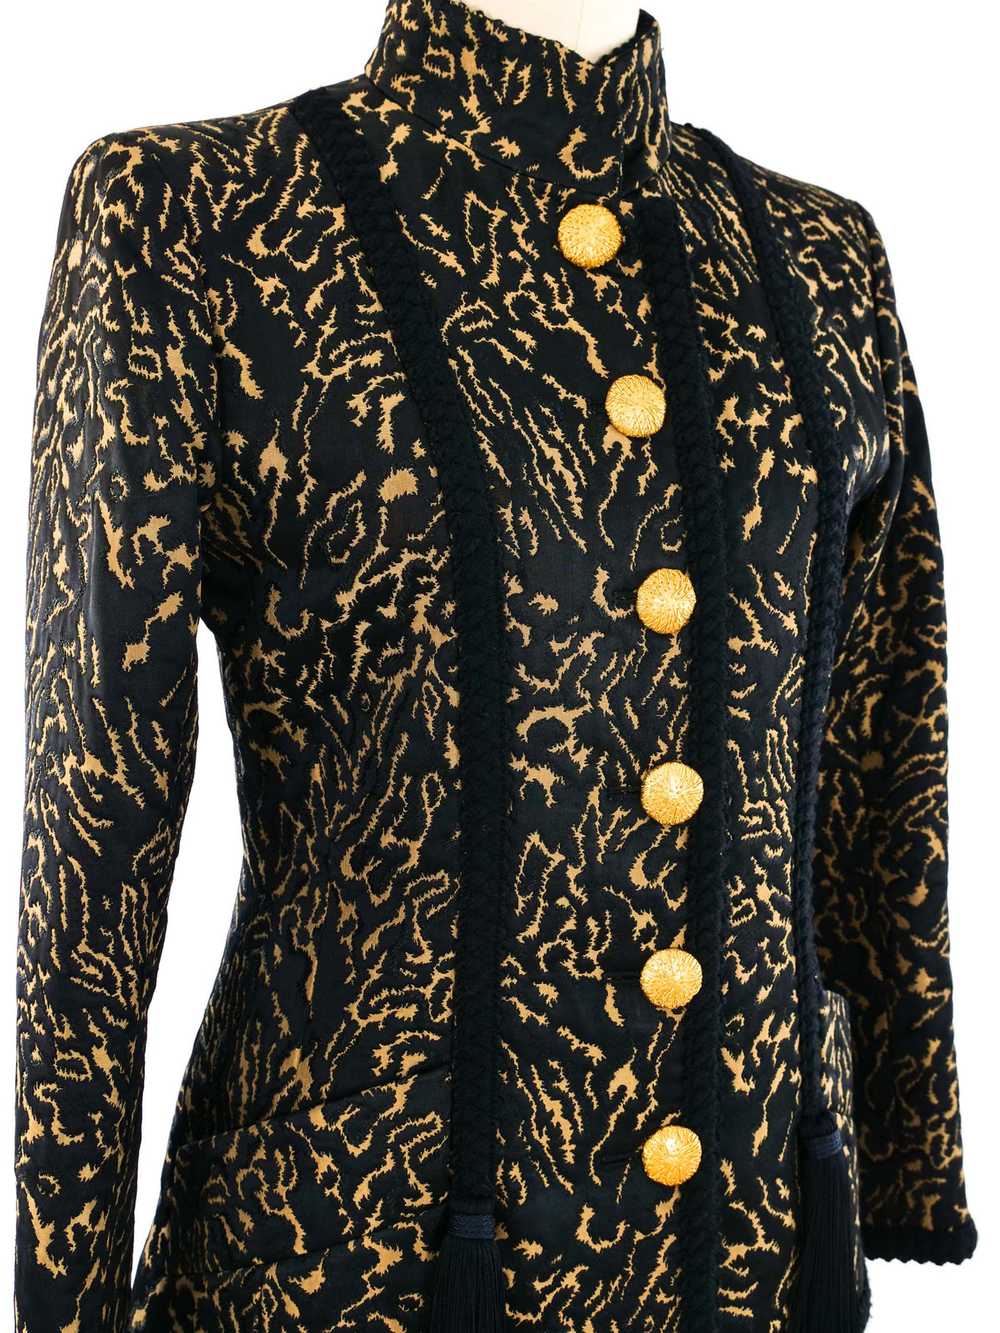 Yves Saint Laurent Brocade Skirt Suit - image 5